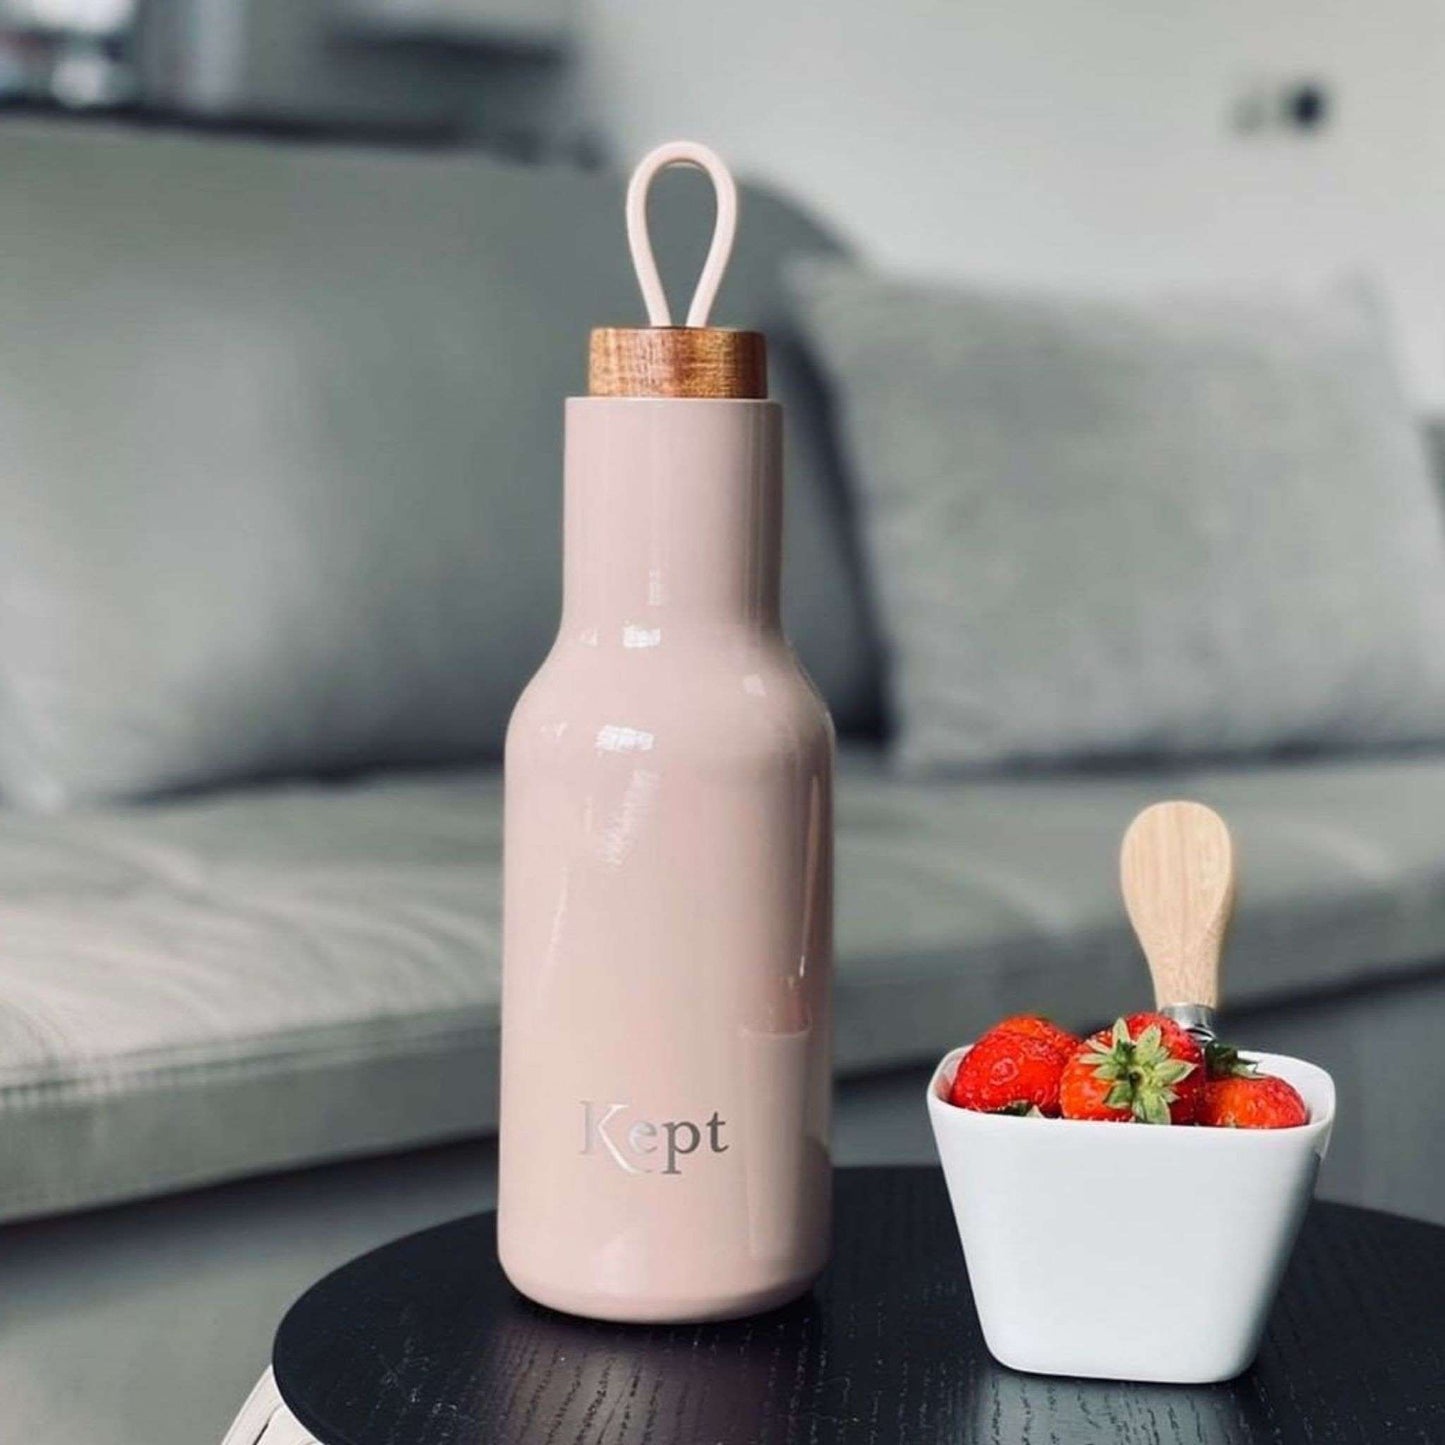 Kept Water Bottles Sandstone Pink Kept Stainless Steel Vacuum Insulated Reusable Water Bottle – 600ml